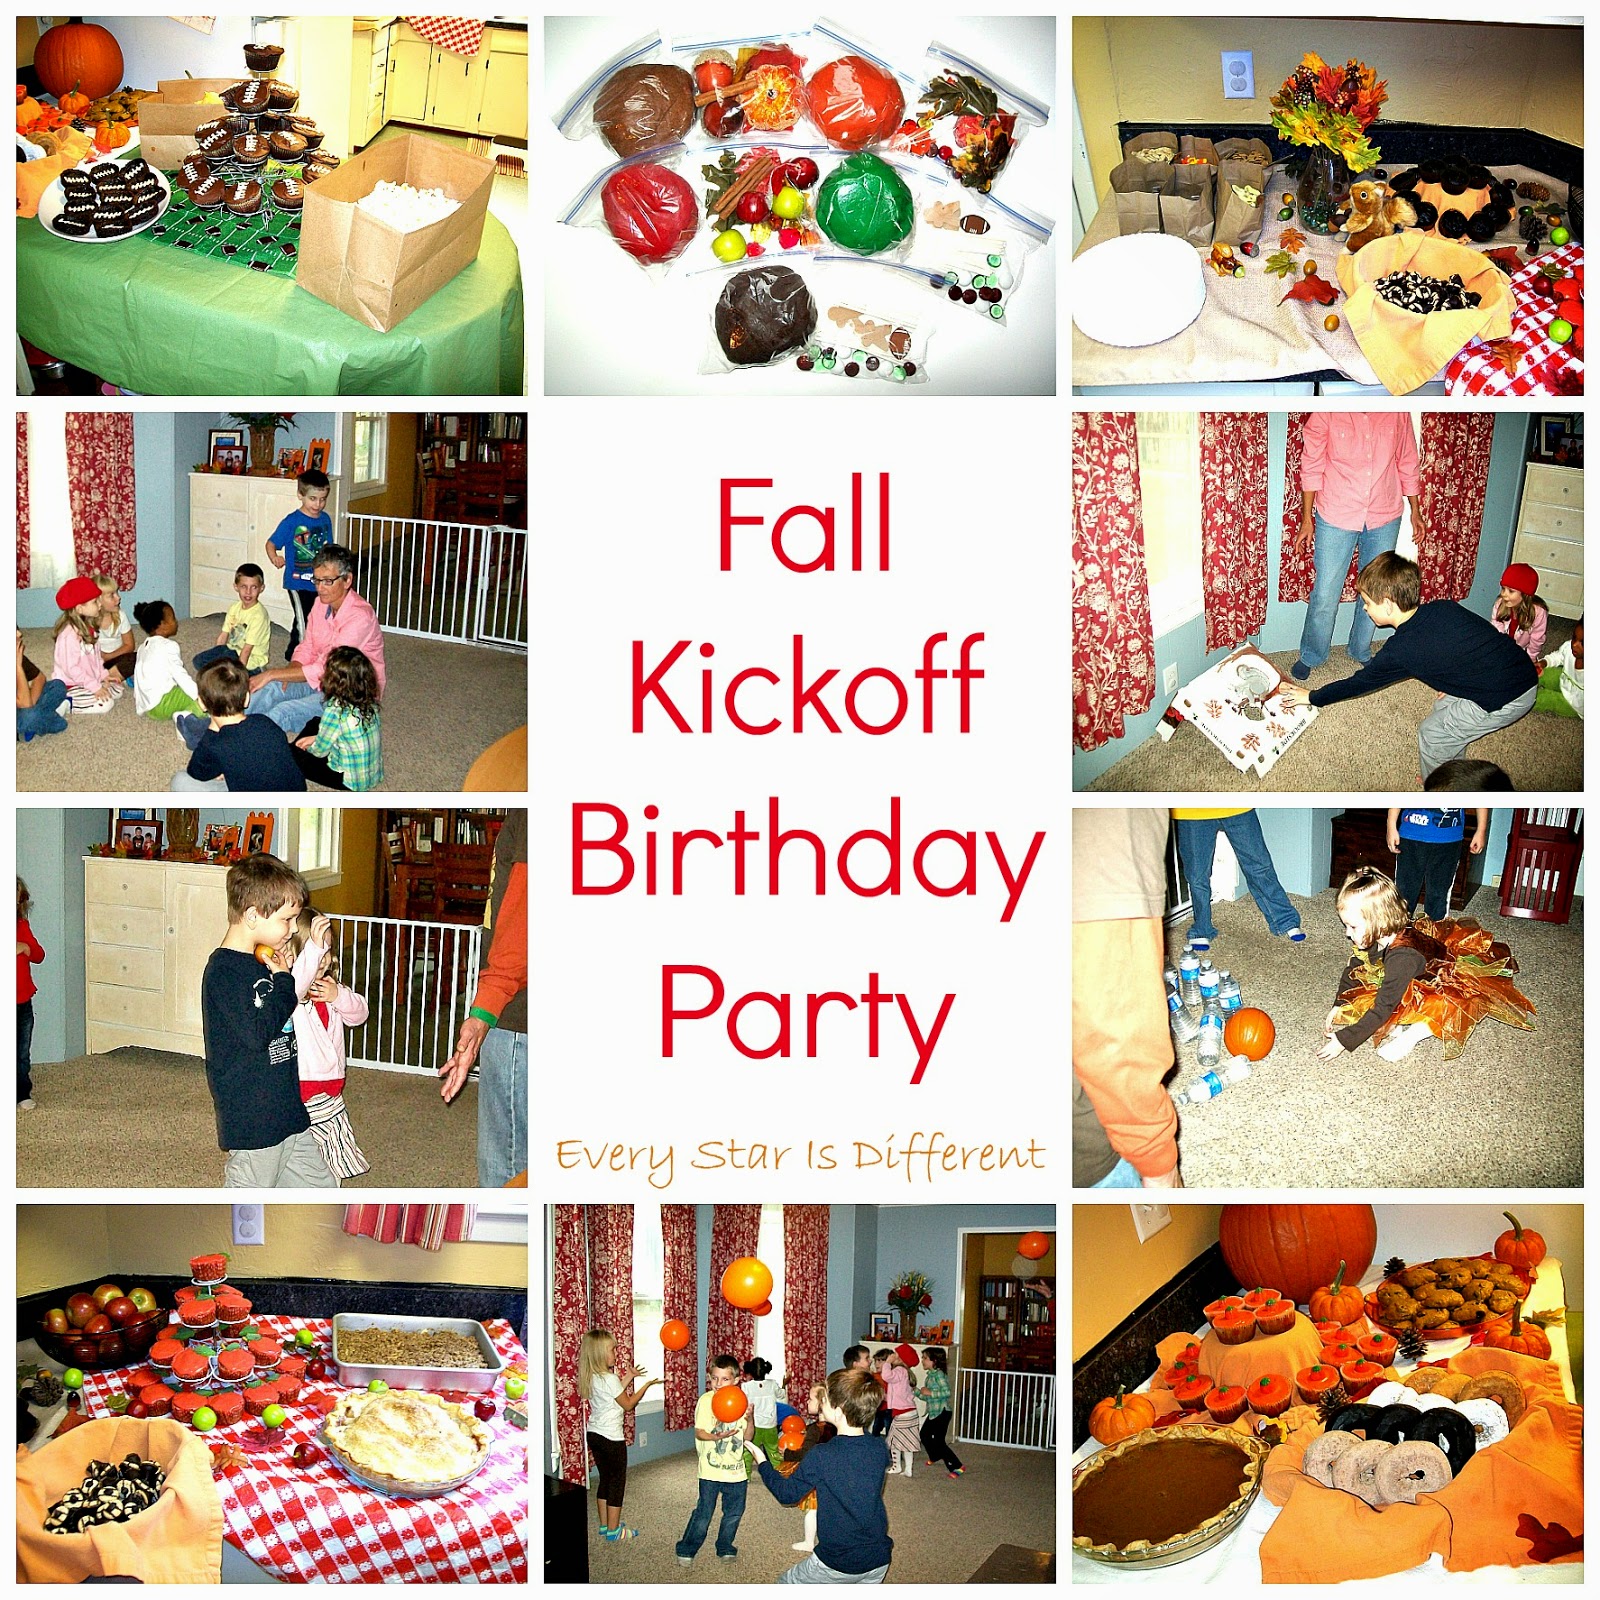 Fall Kickoff Birthday Party